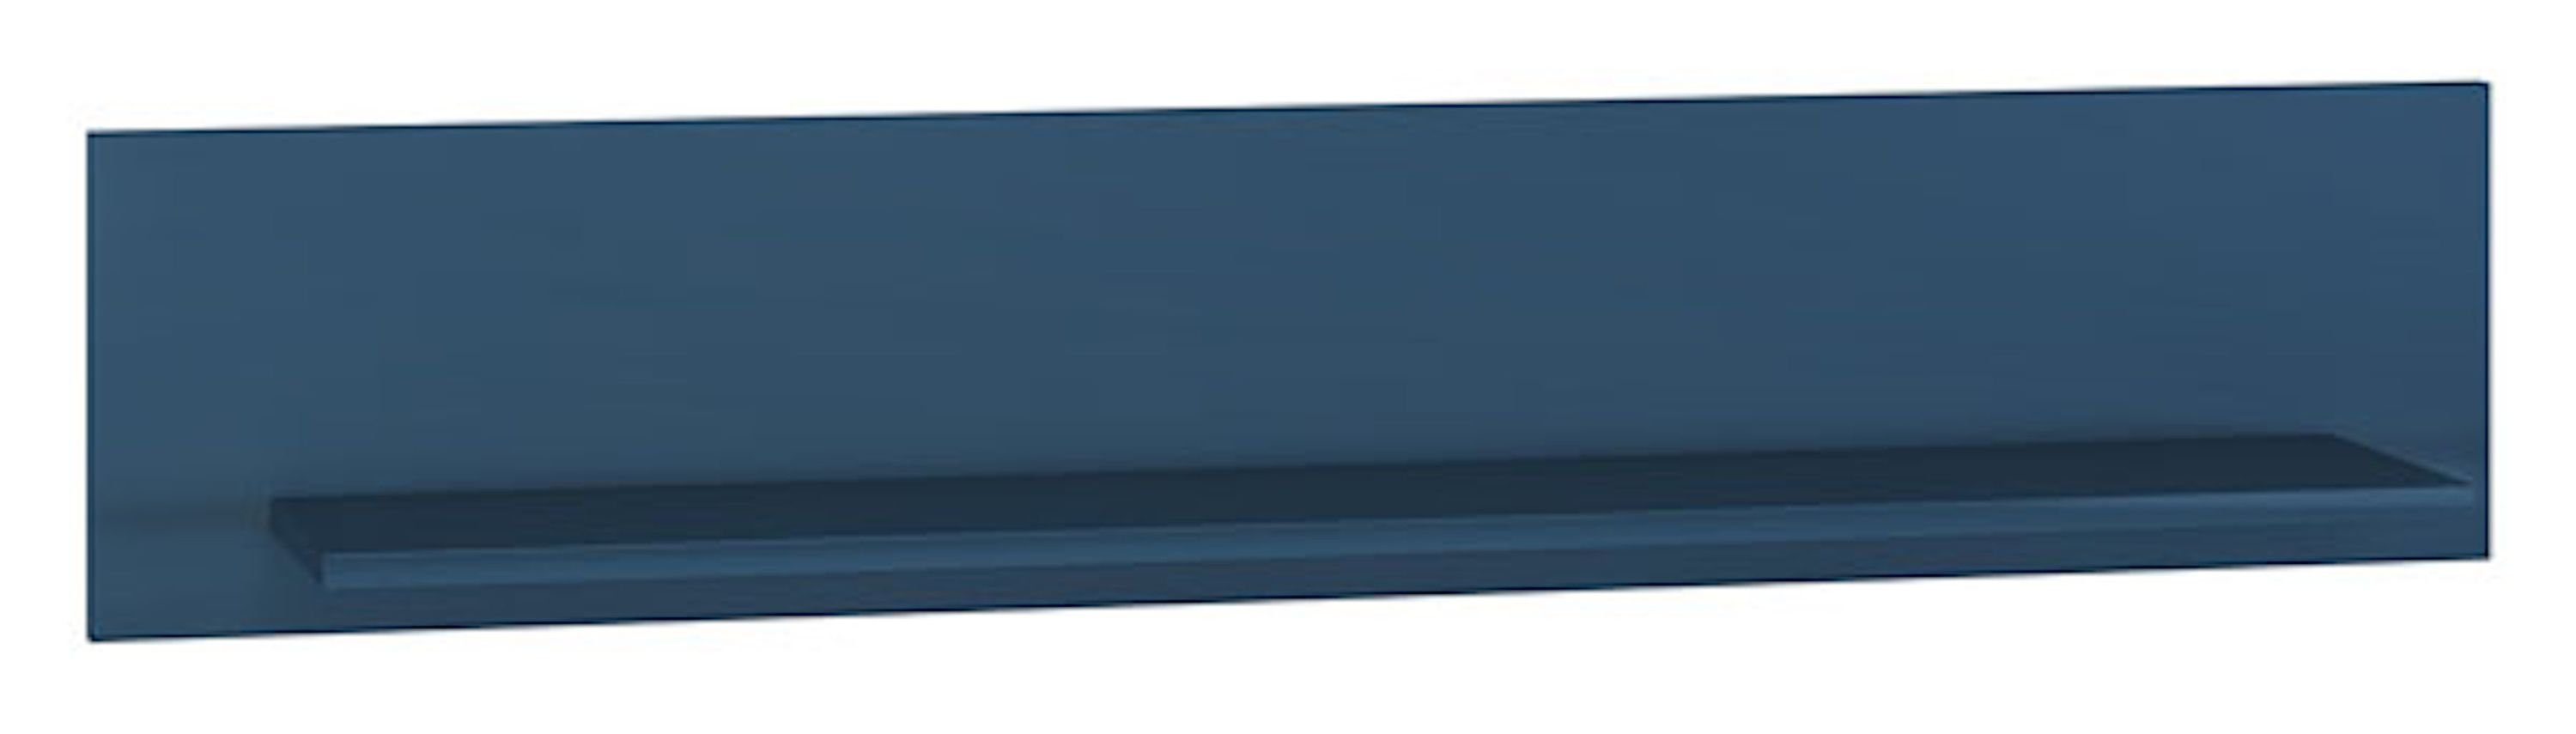 Feldmann-Wohnen 120cm Wandboard Marine, dunkelblau